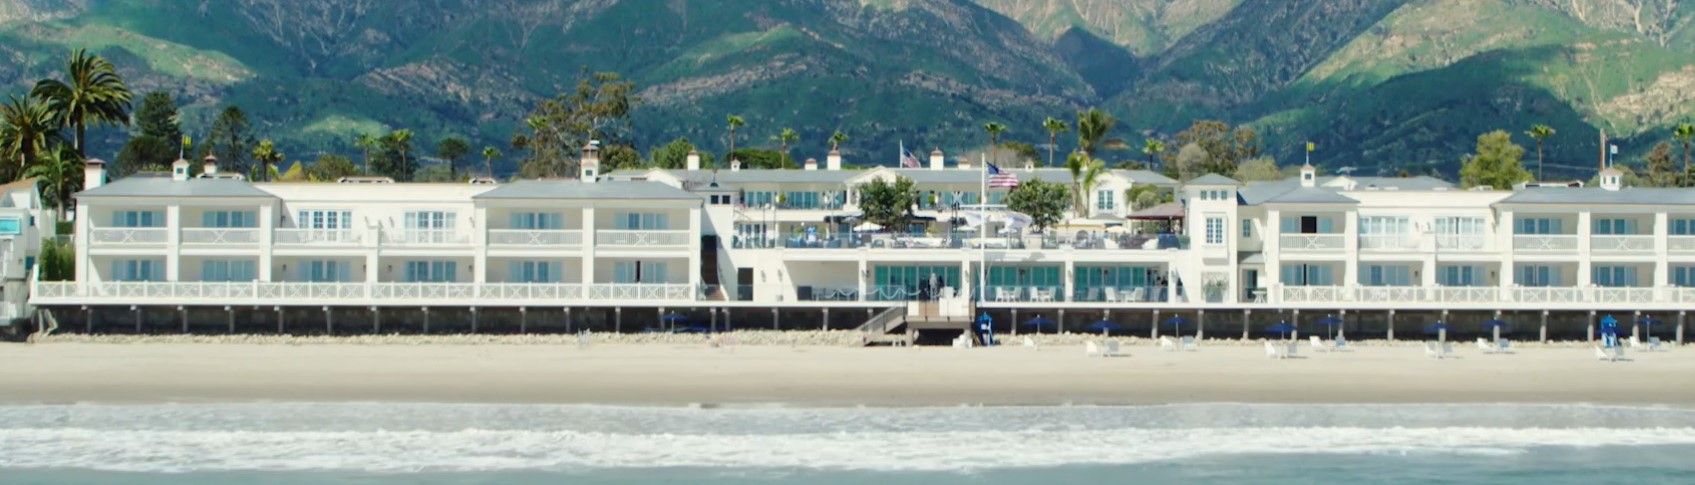 California HOTEL|カリフォルニア州 ホテル